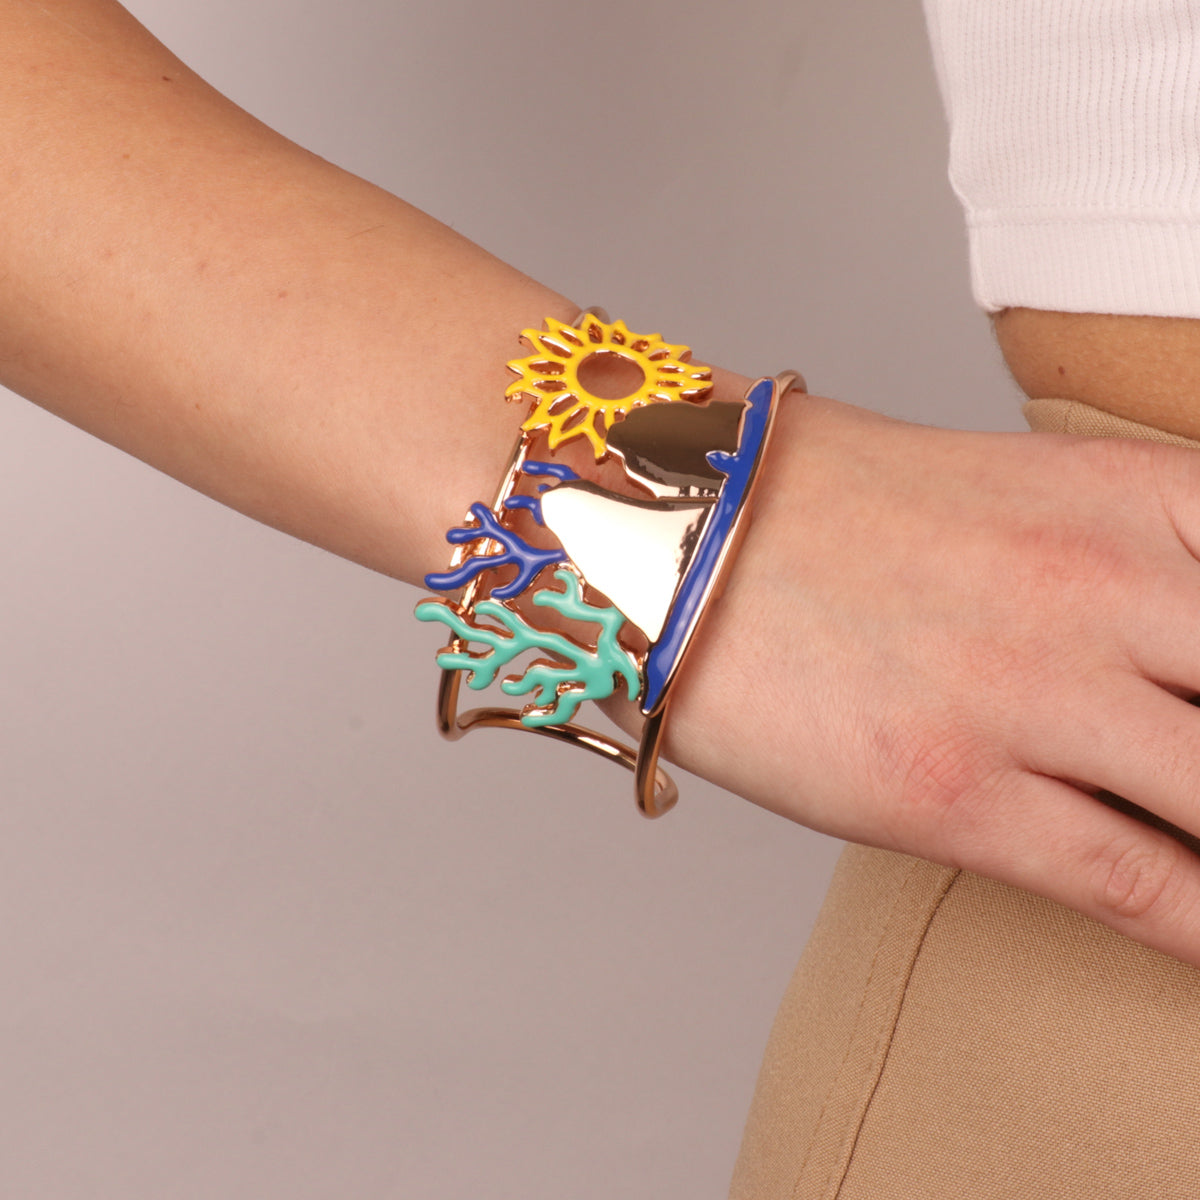 Metal bracelet with faraglioni, sun and corals